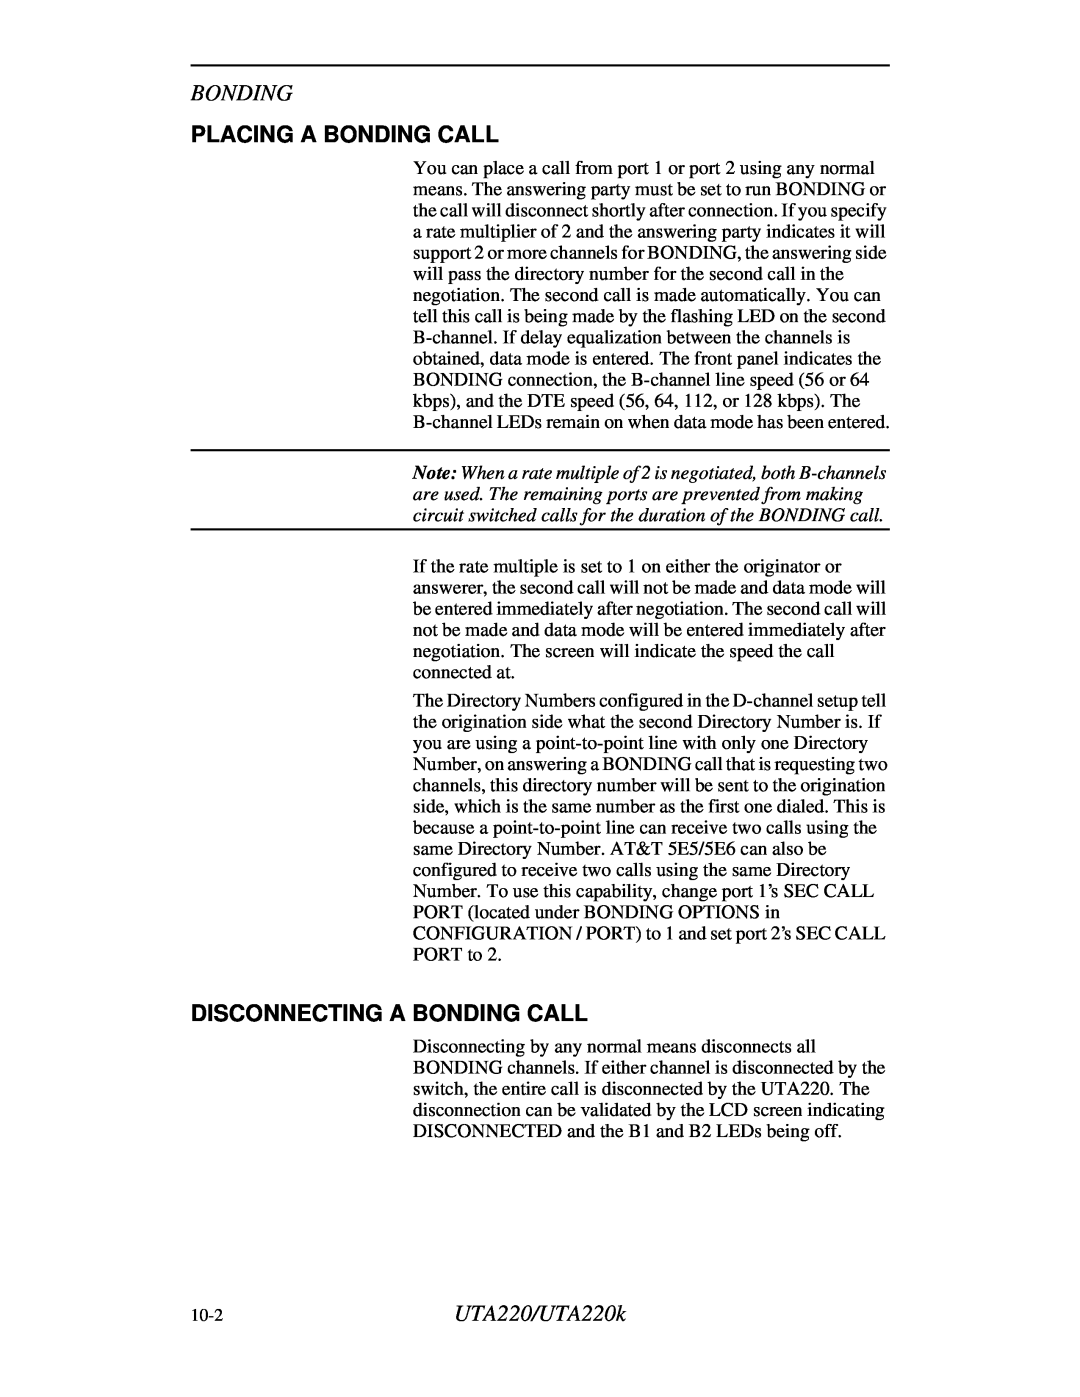 Northern UTA220/UTA220k manual Placing A Bonding Call, Disconnecting A Bonding Call 